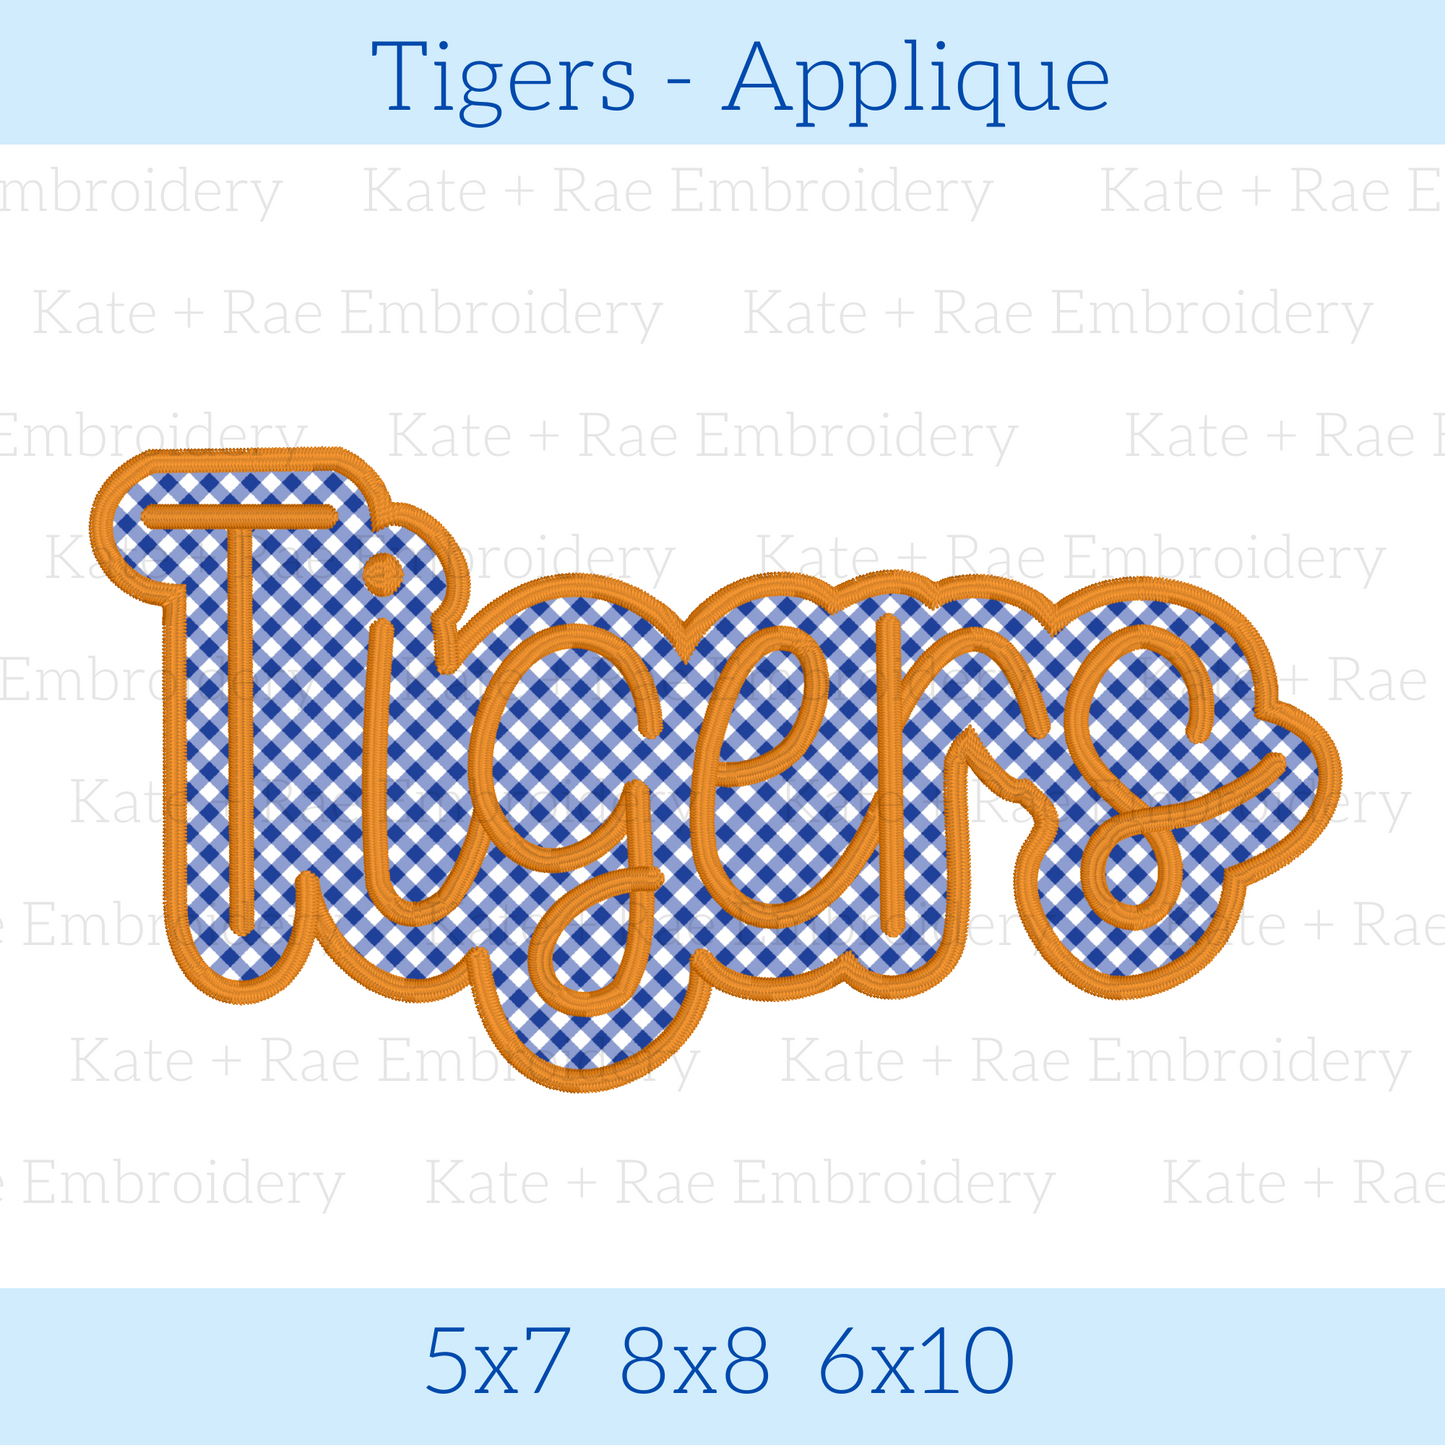 Tigers Applique Embroidery Design